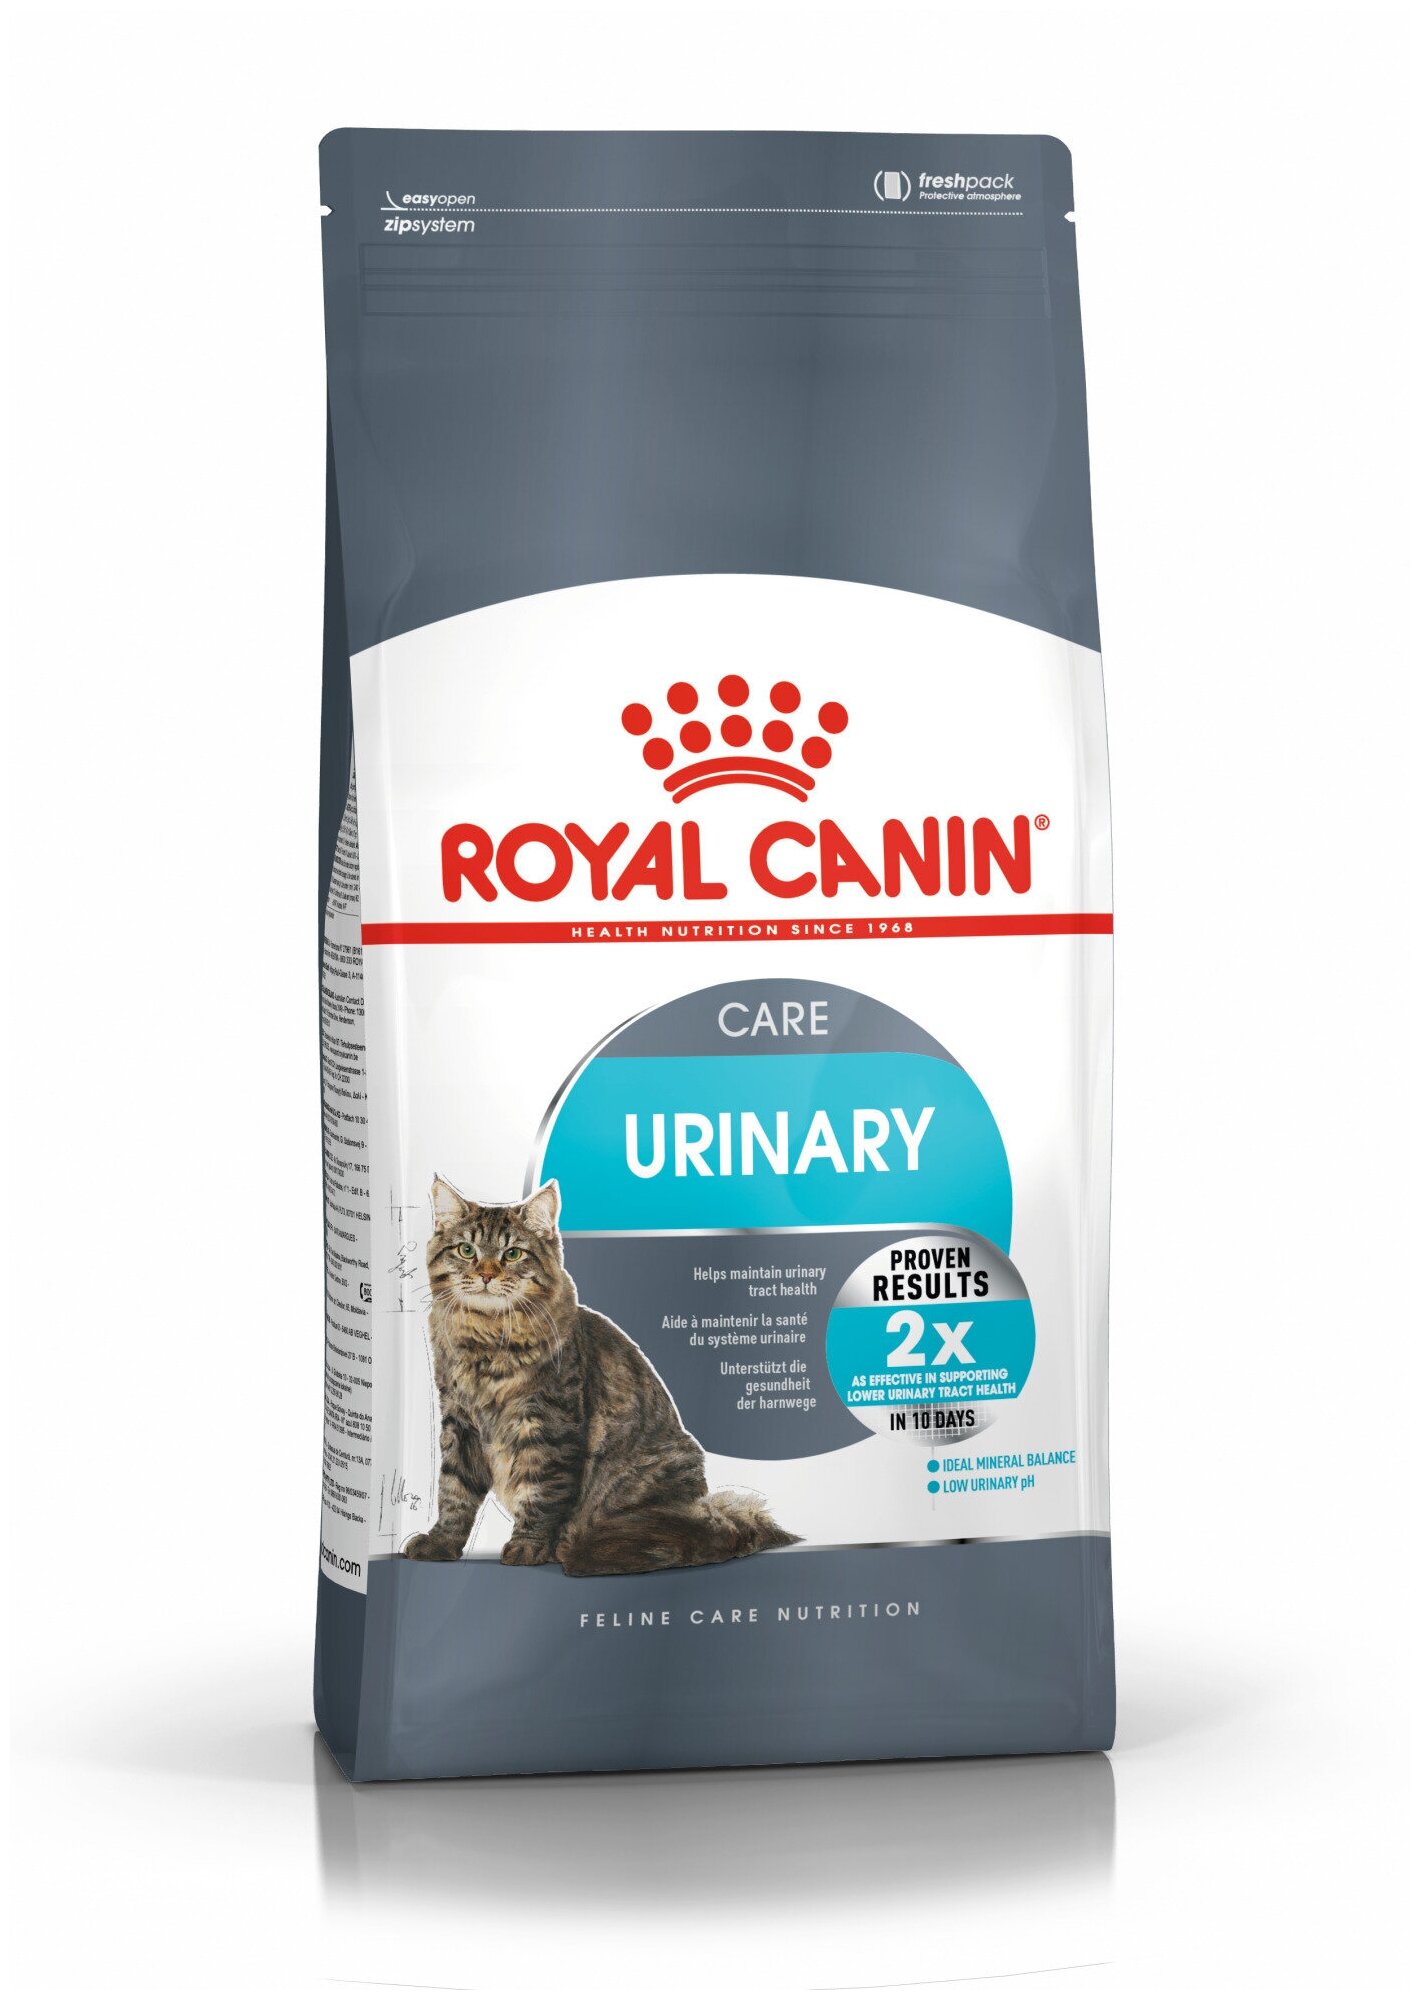 Royal Canin Cухой корм для кошек профилактика МКБ Urinary Care, 400гр